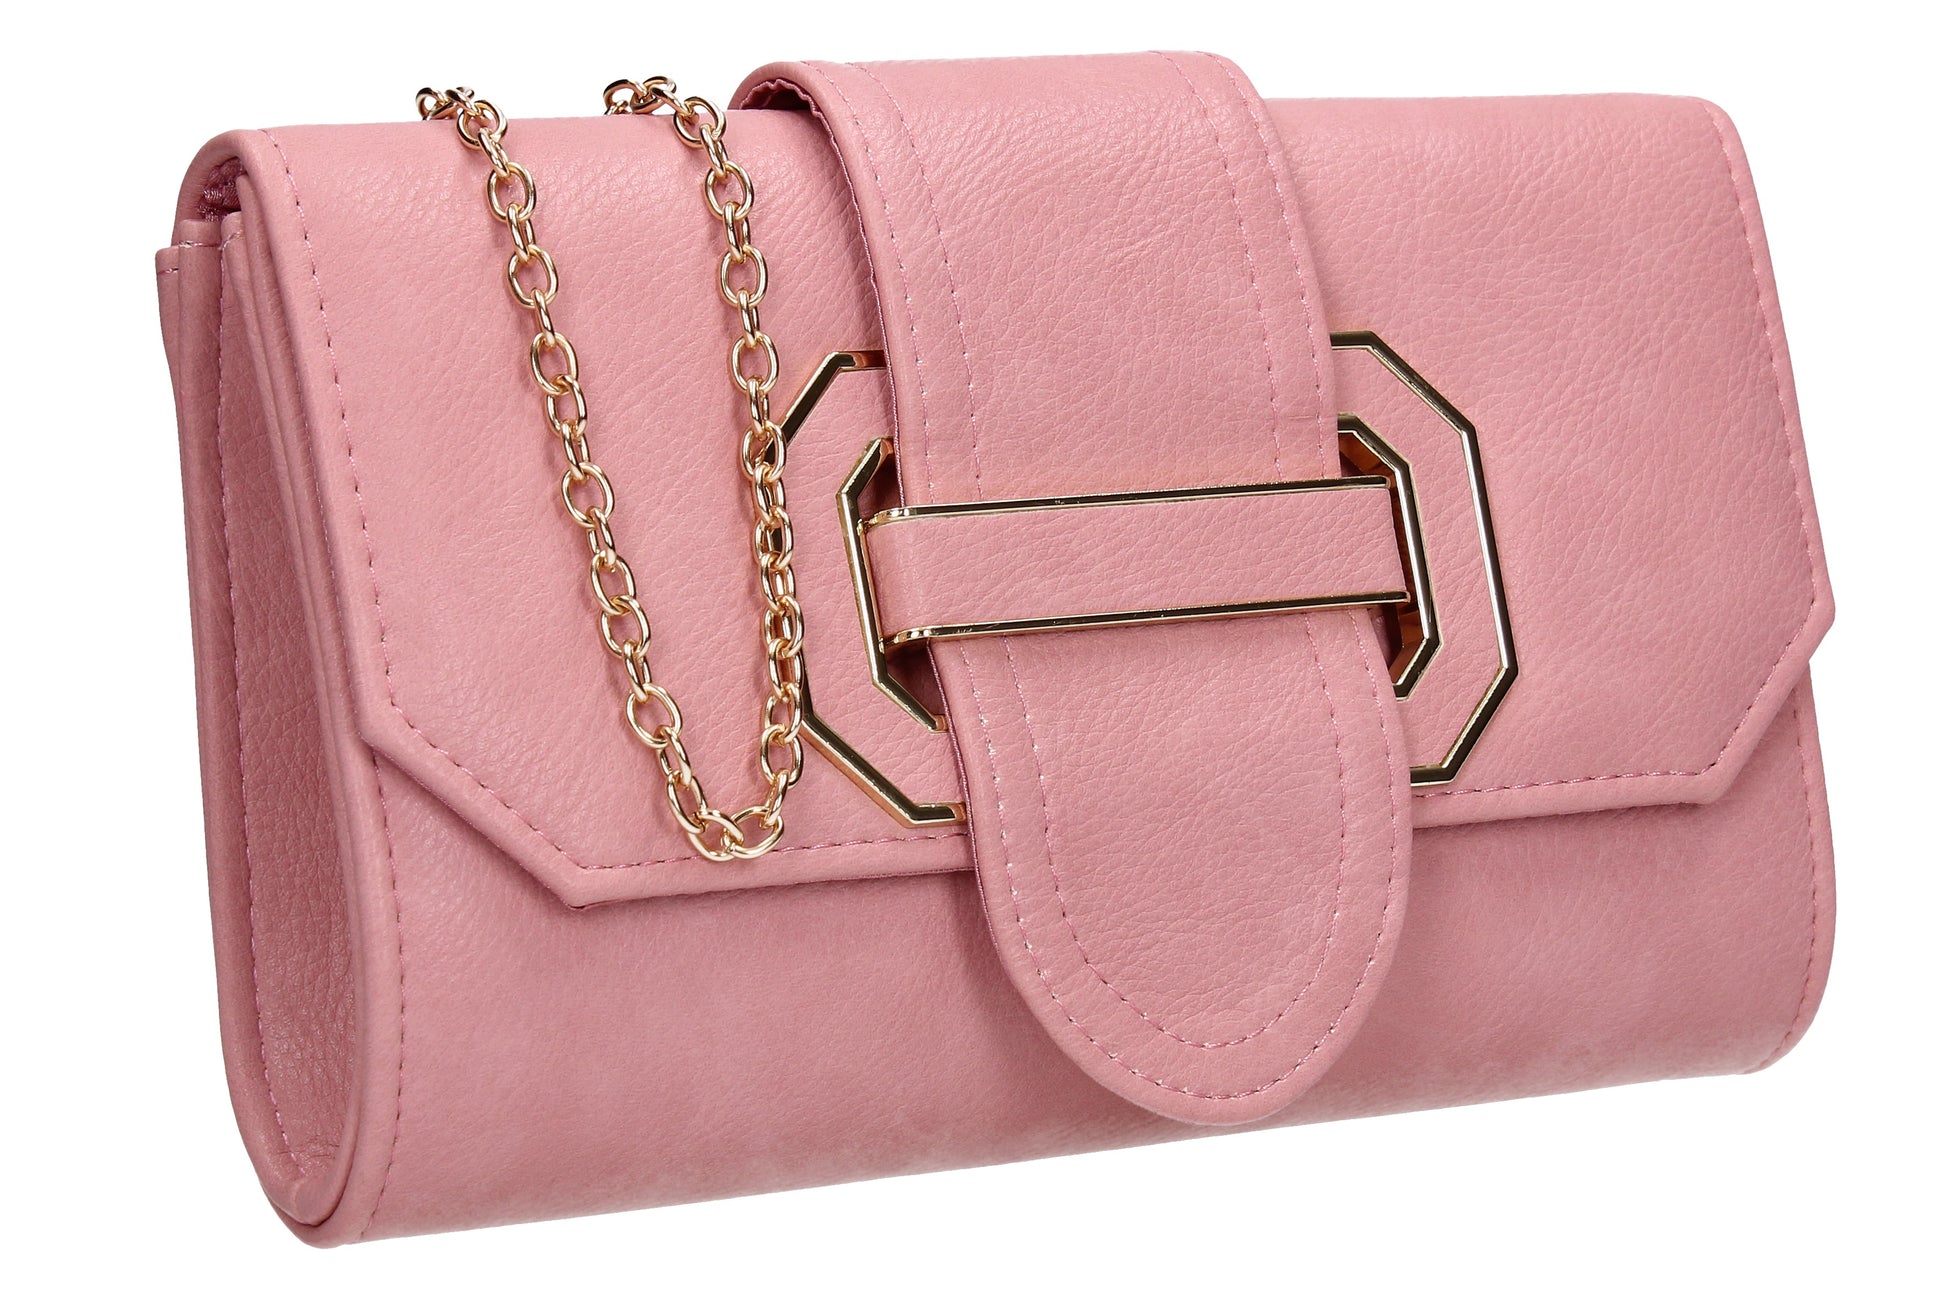 SWANKYSWANS Nora Fancy Clutch Bag Pink Cute Cheap Clutch Bag For Weddings School and Work